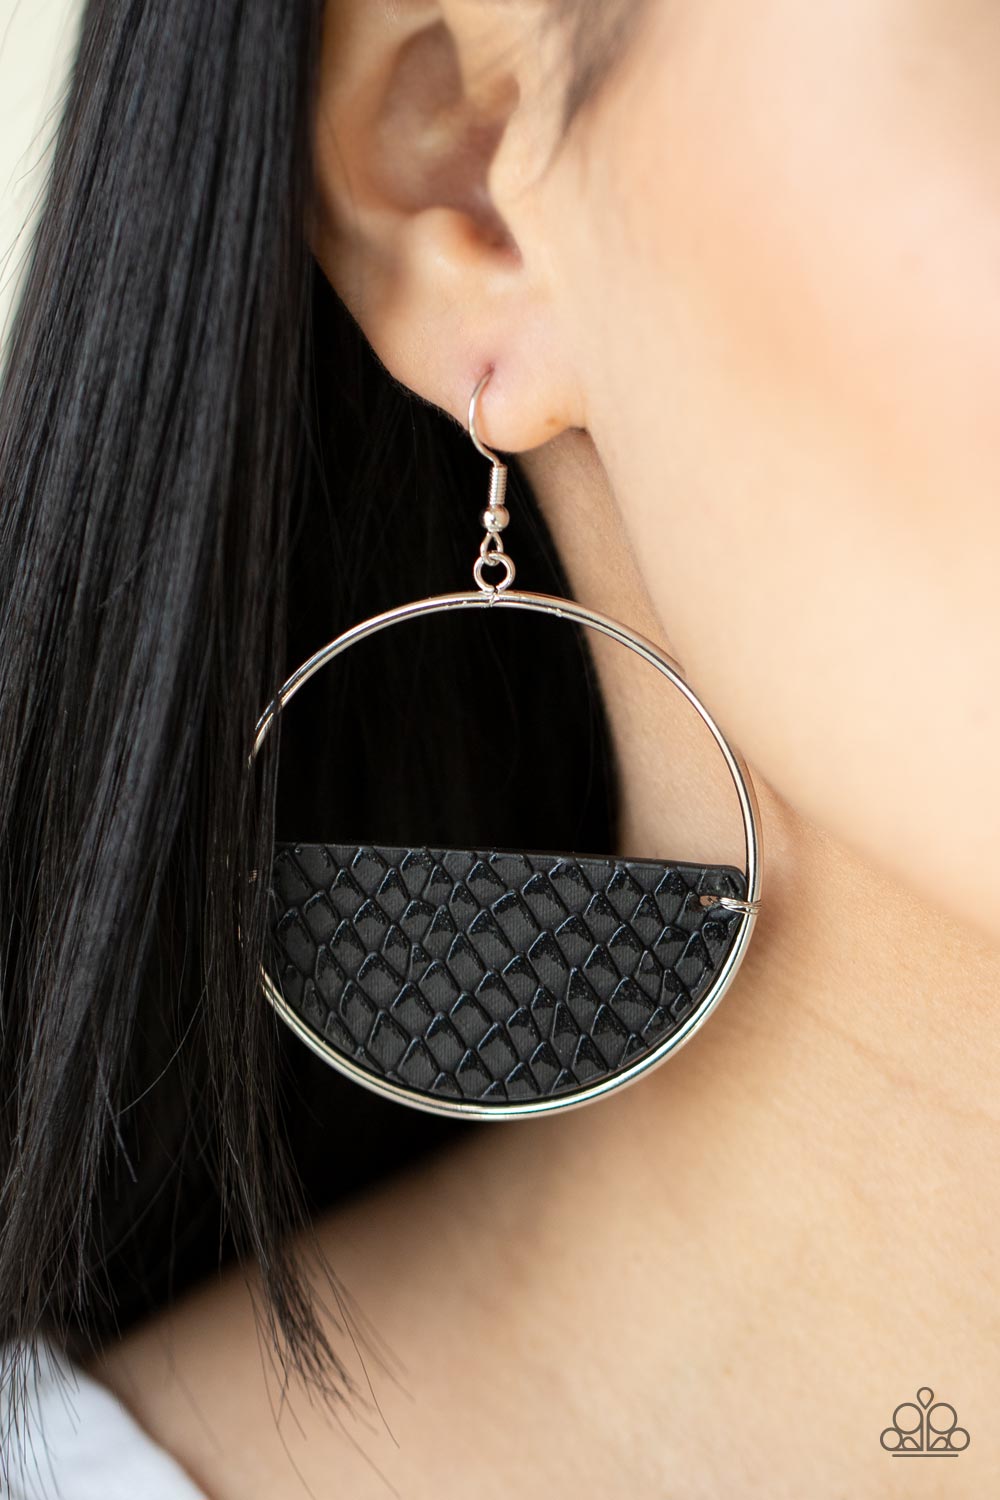 Animal Aesthetic - Black leather earrings